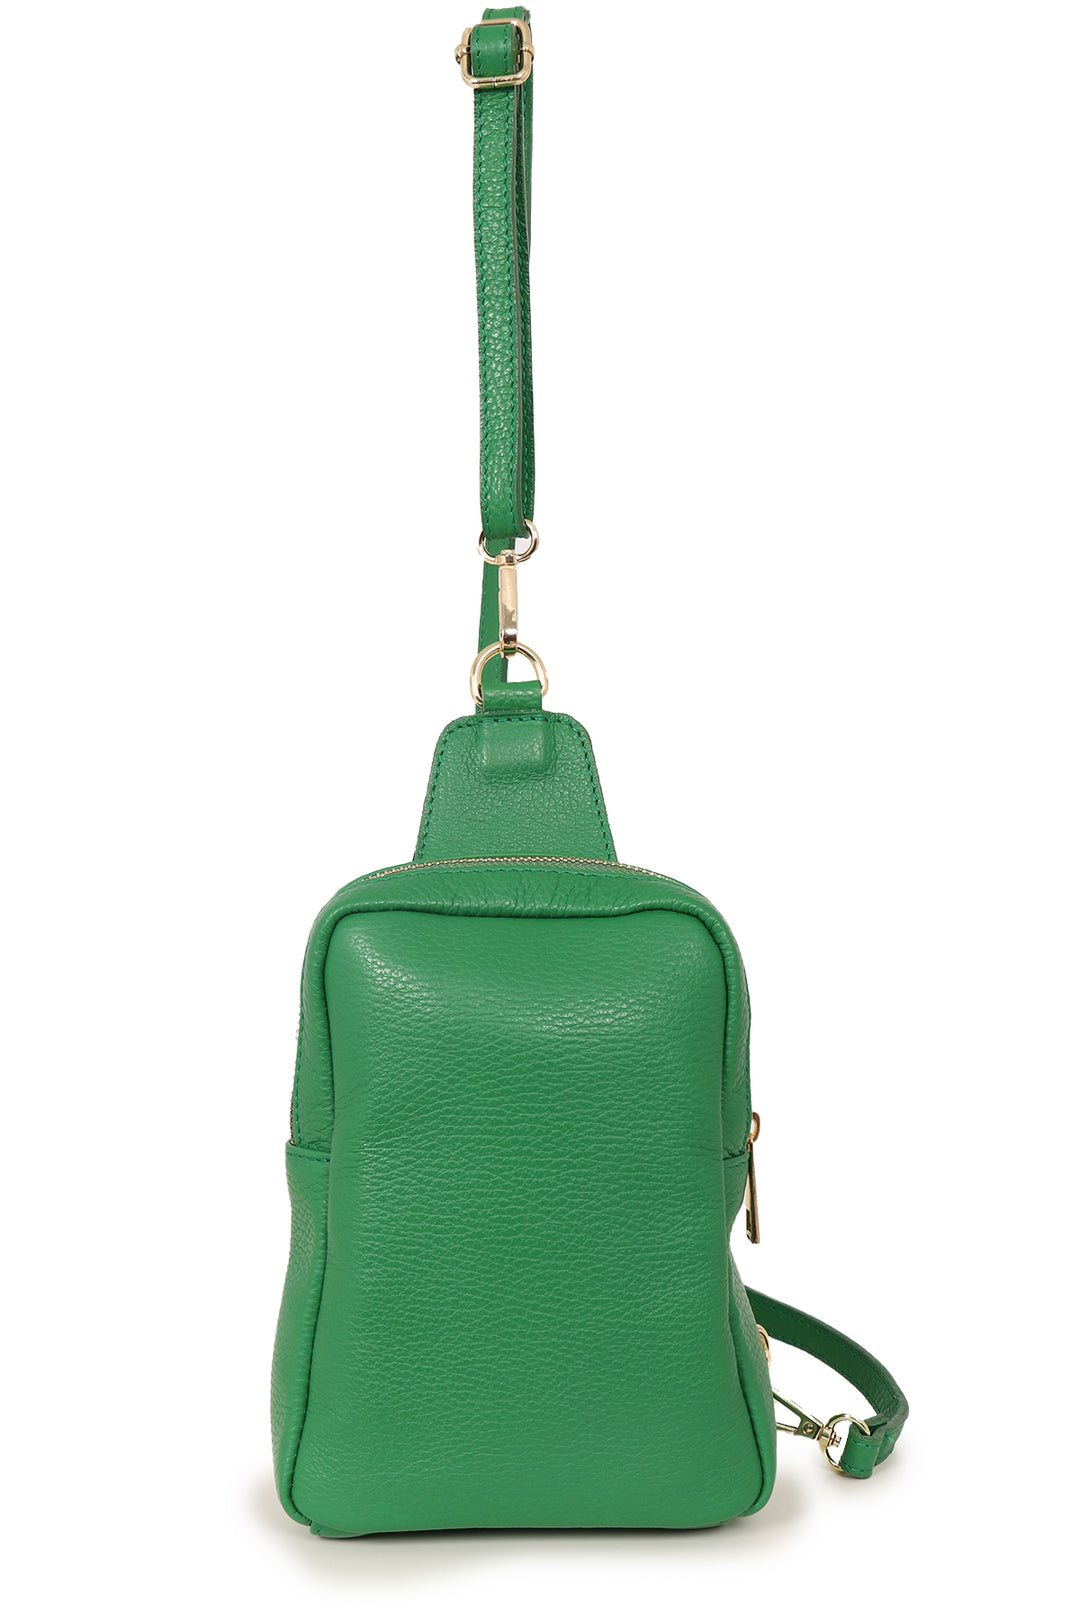 Bright Green Genuine Italian Leather Sling Bag